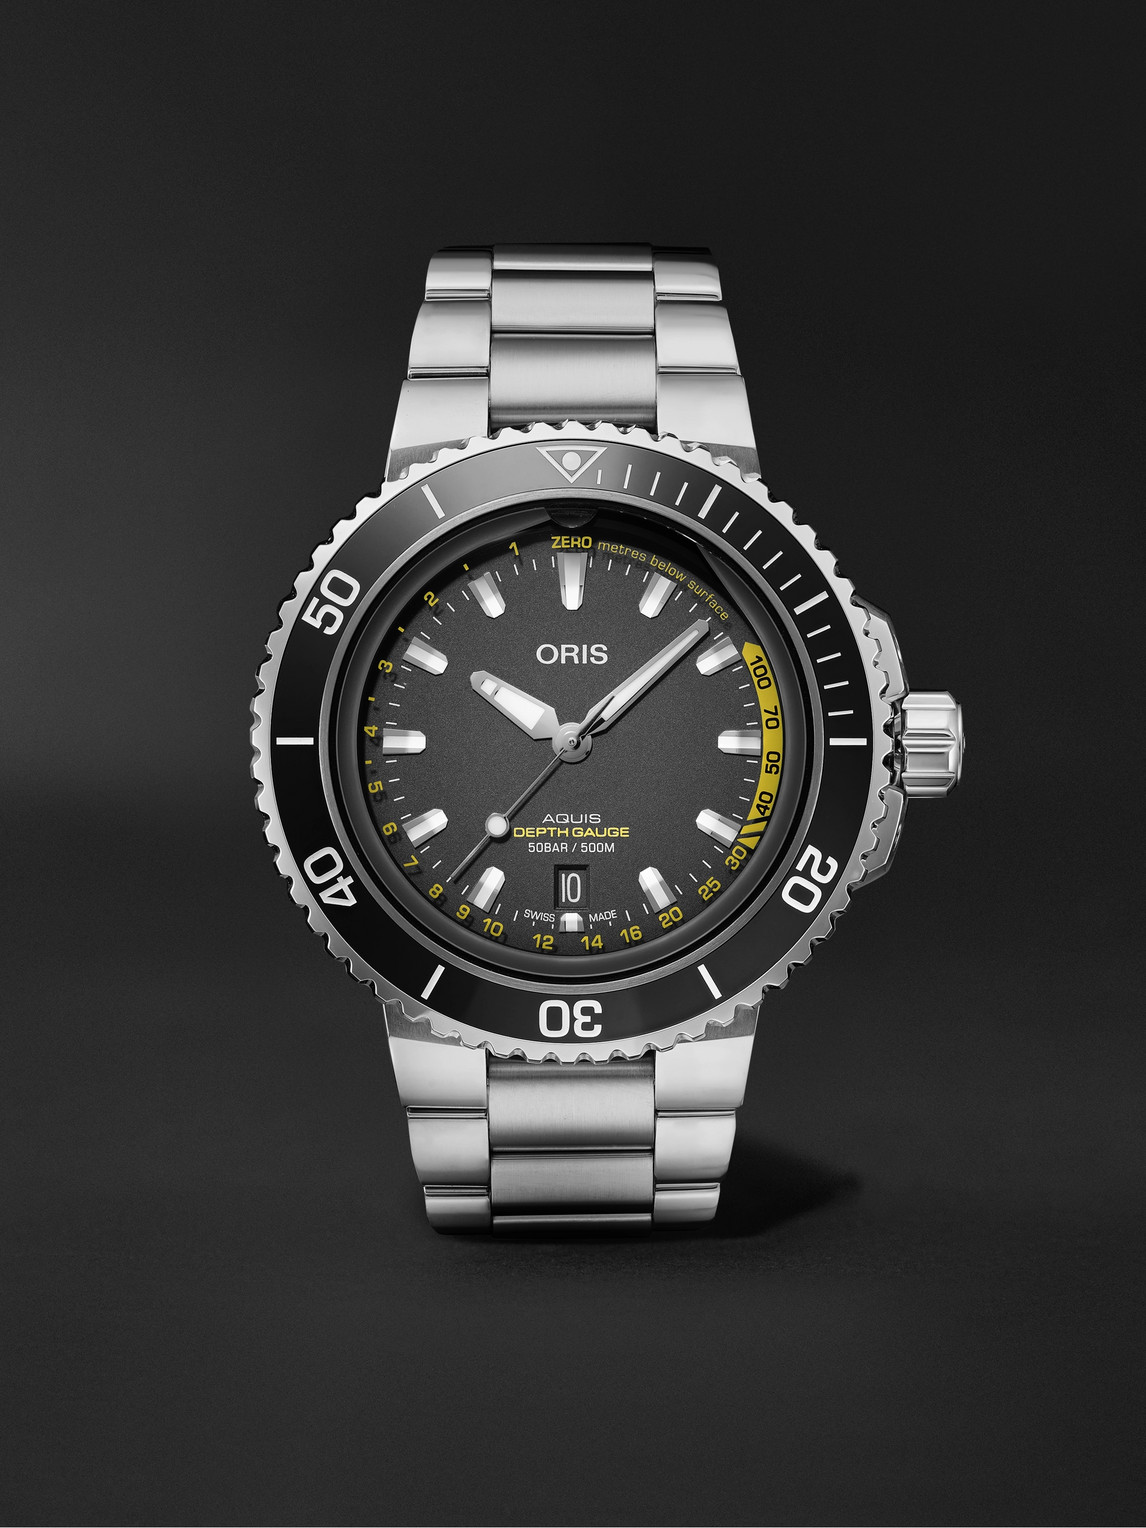 Aquis Depth Gauge Automatic 45.8mm Stainless Steel Watch, Ref. No. 01 733 7755 4154-Set MB